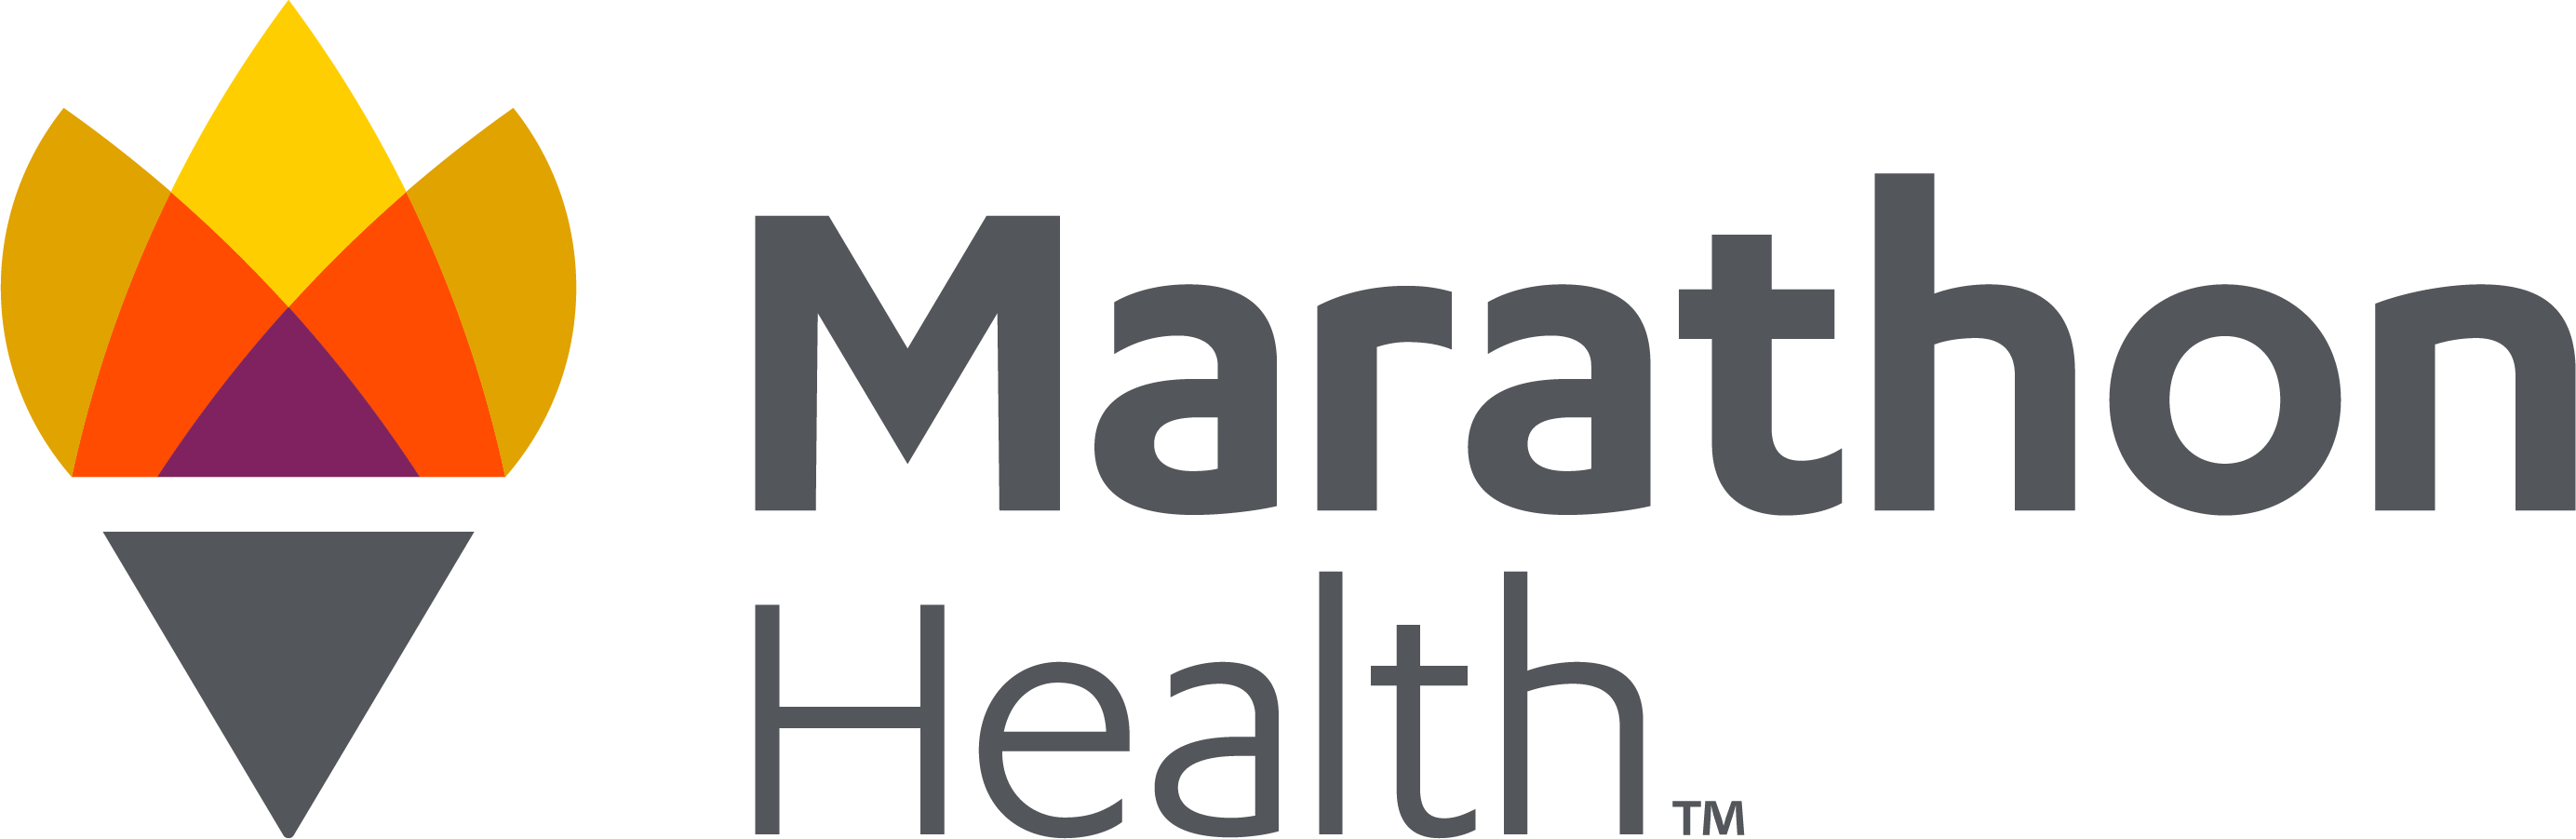 Marathon Health Logo .png